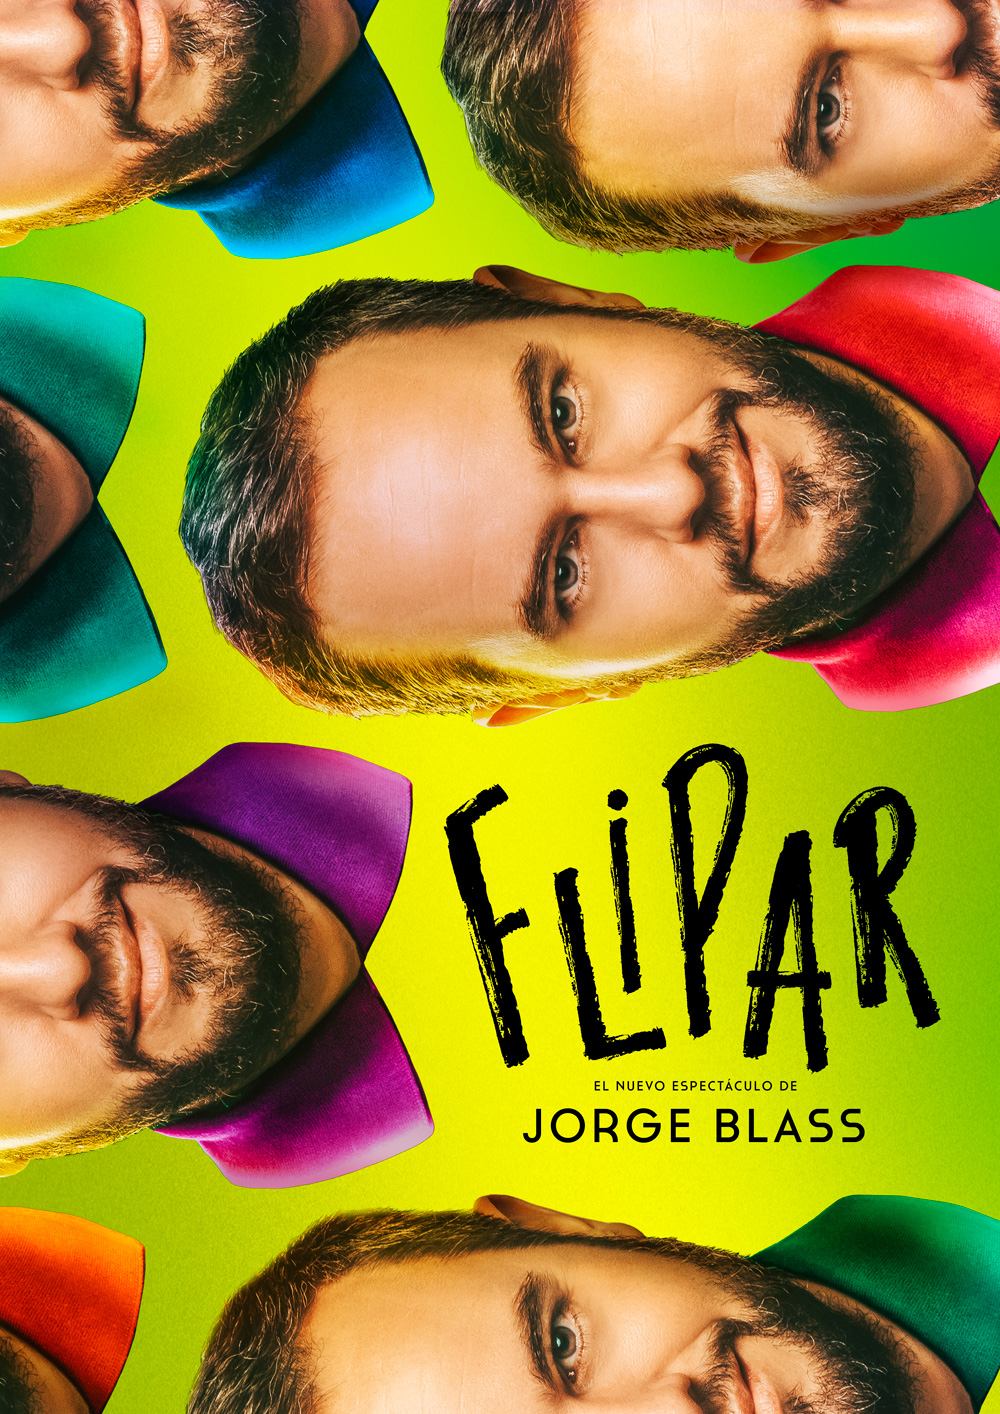 Jorge Blass. Flipar